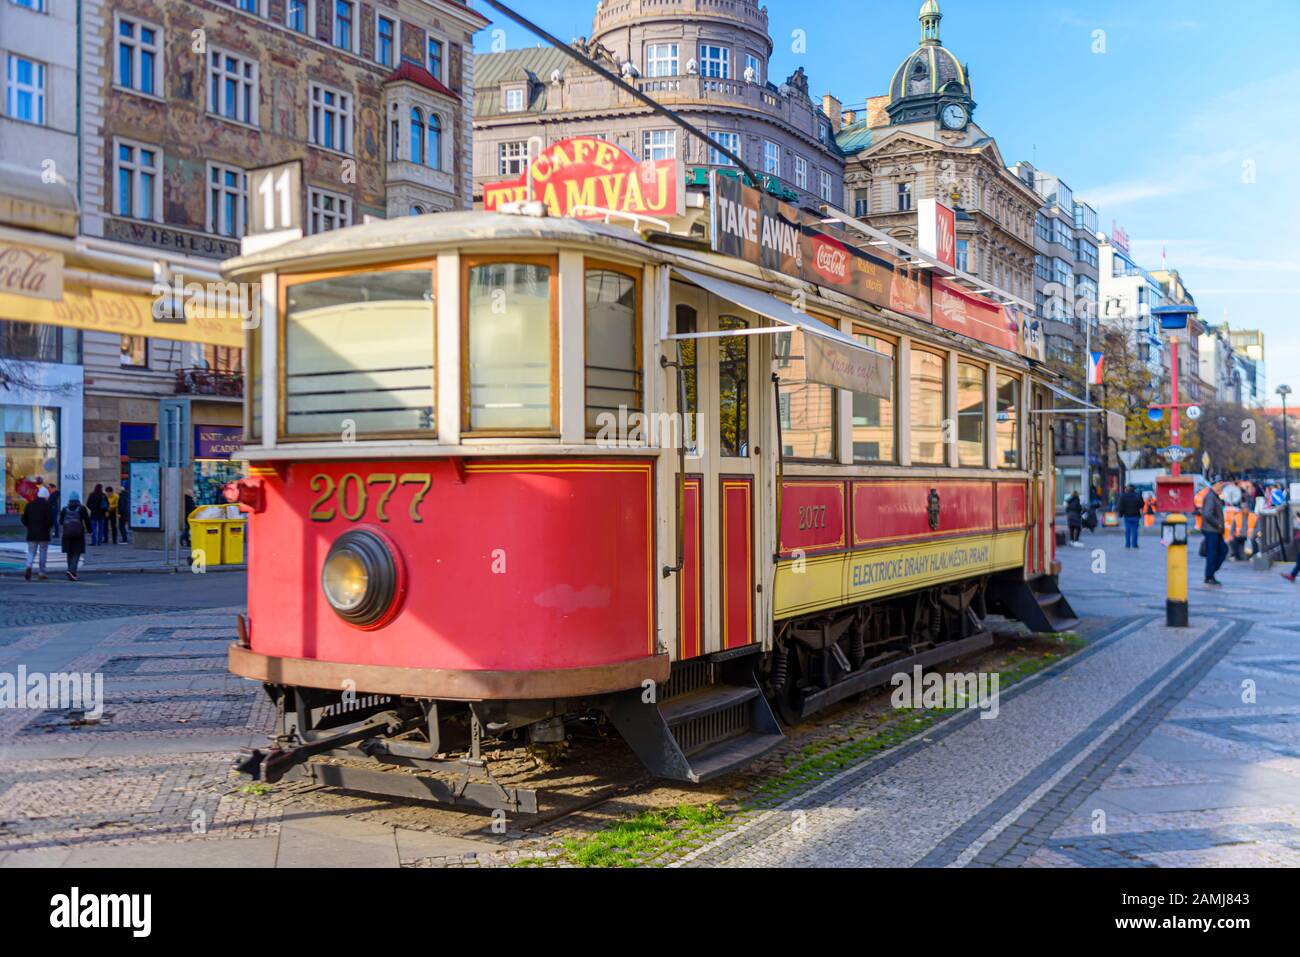 Tramcar converted into a café, Wenseslas Square, Prague, Czech Republic Stock Photo